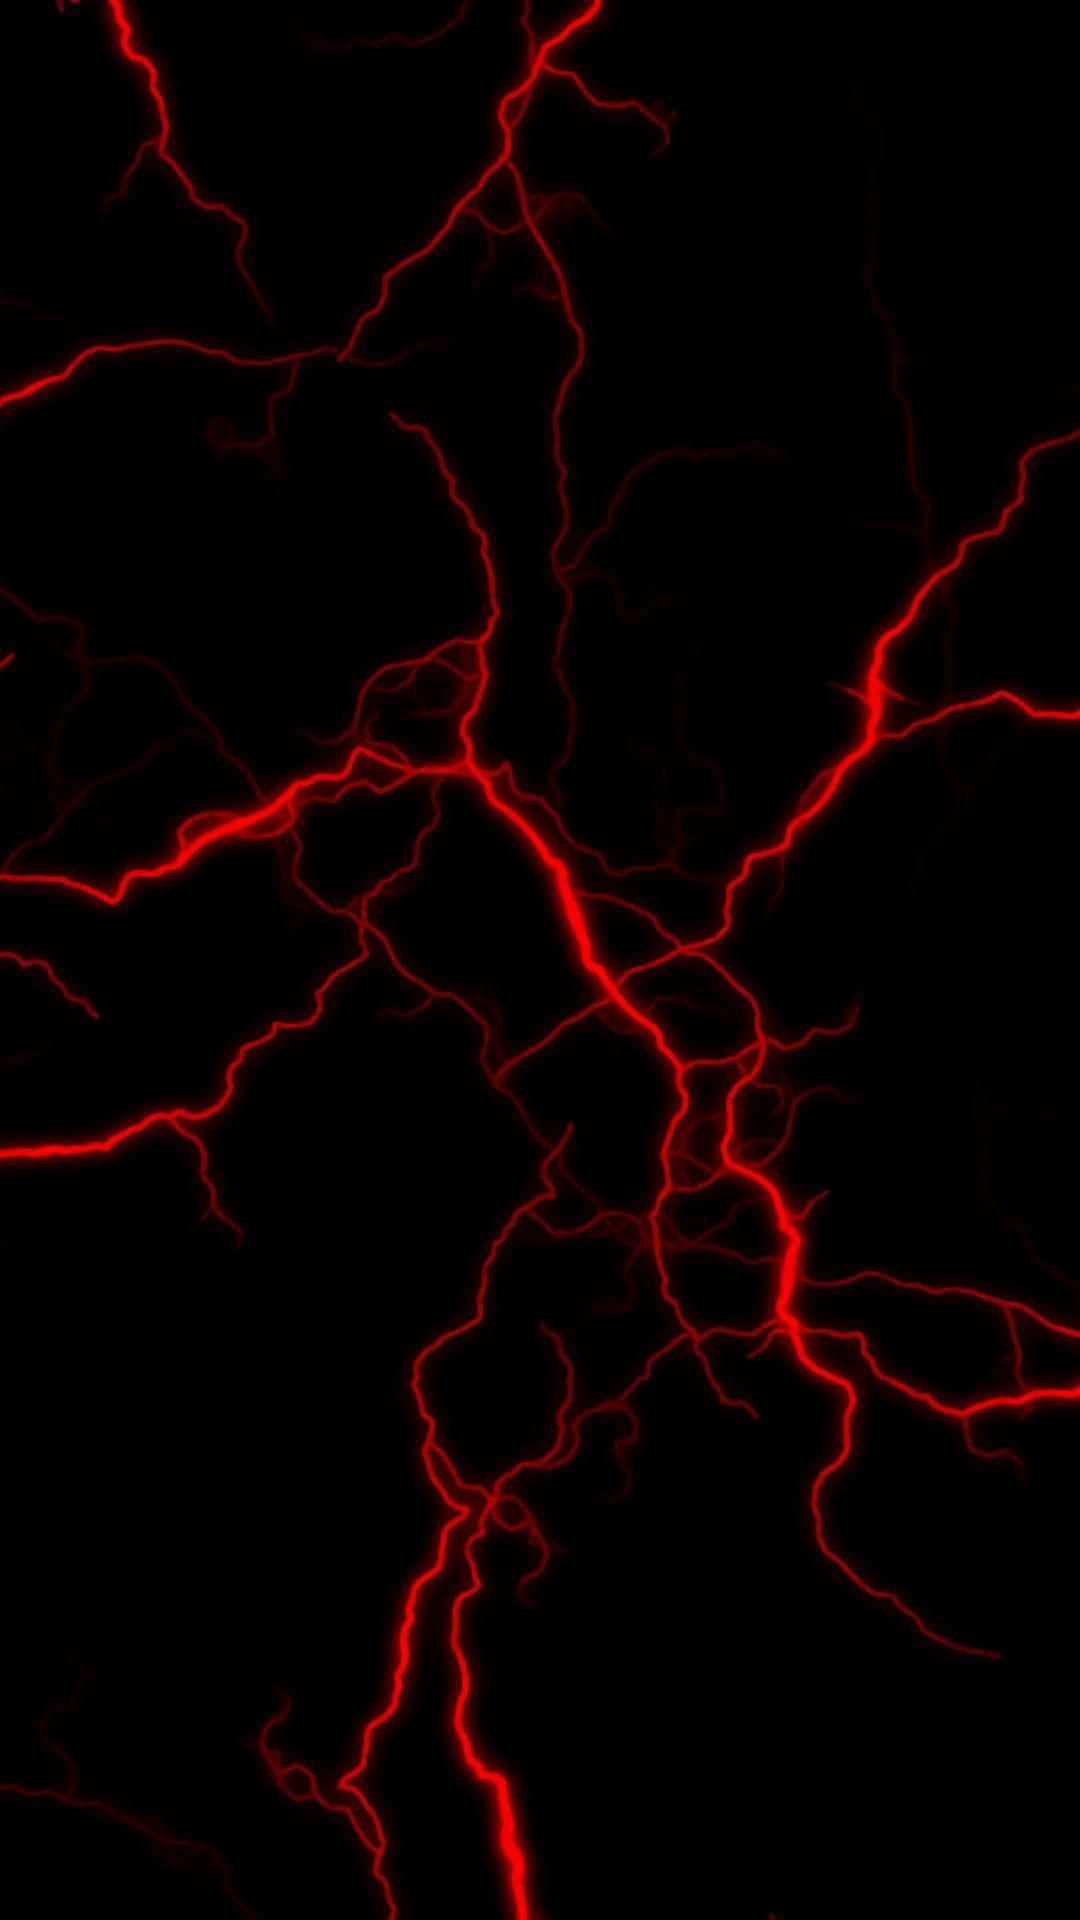 A bolt of red lightning streaks across the night sky.